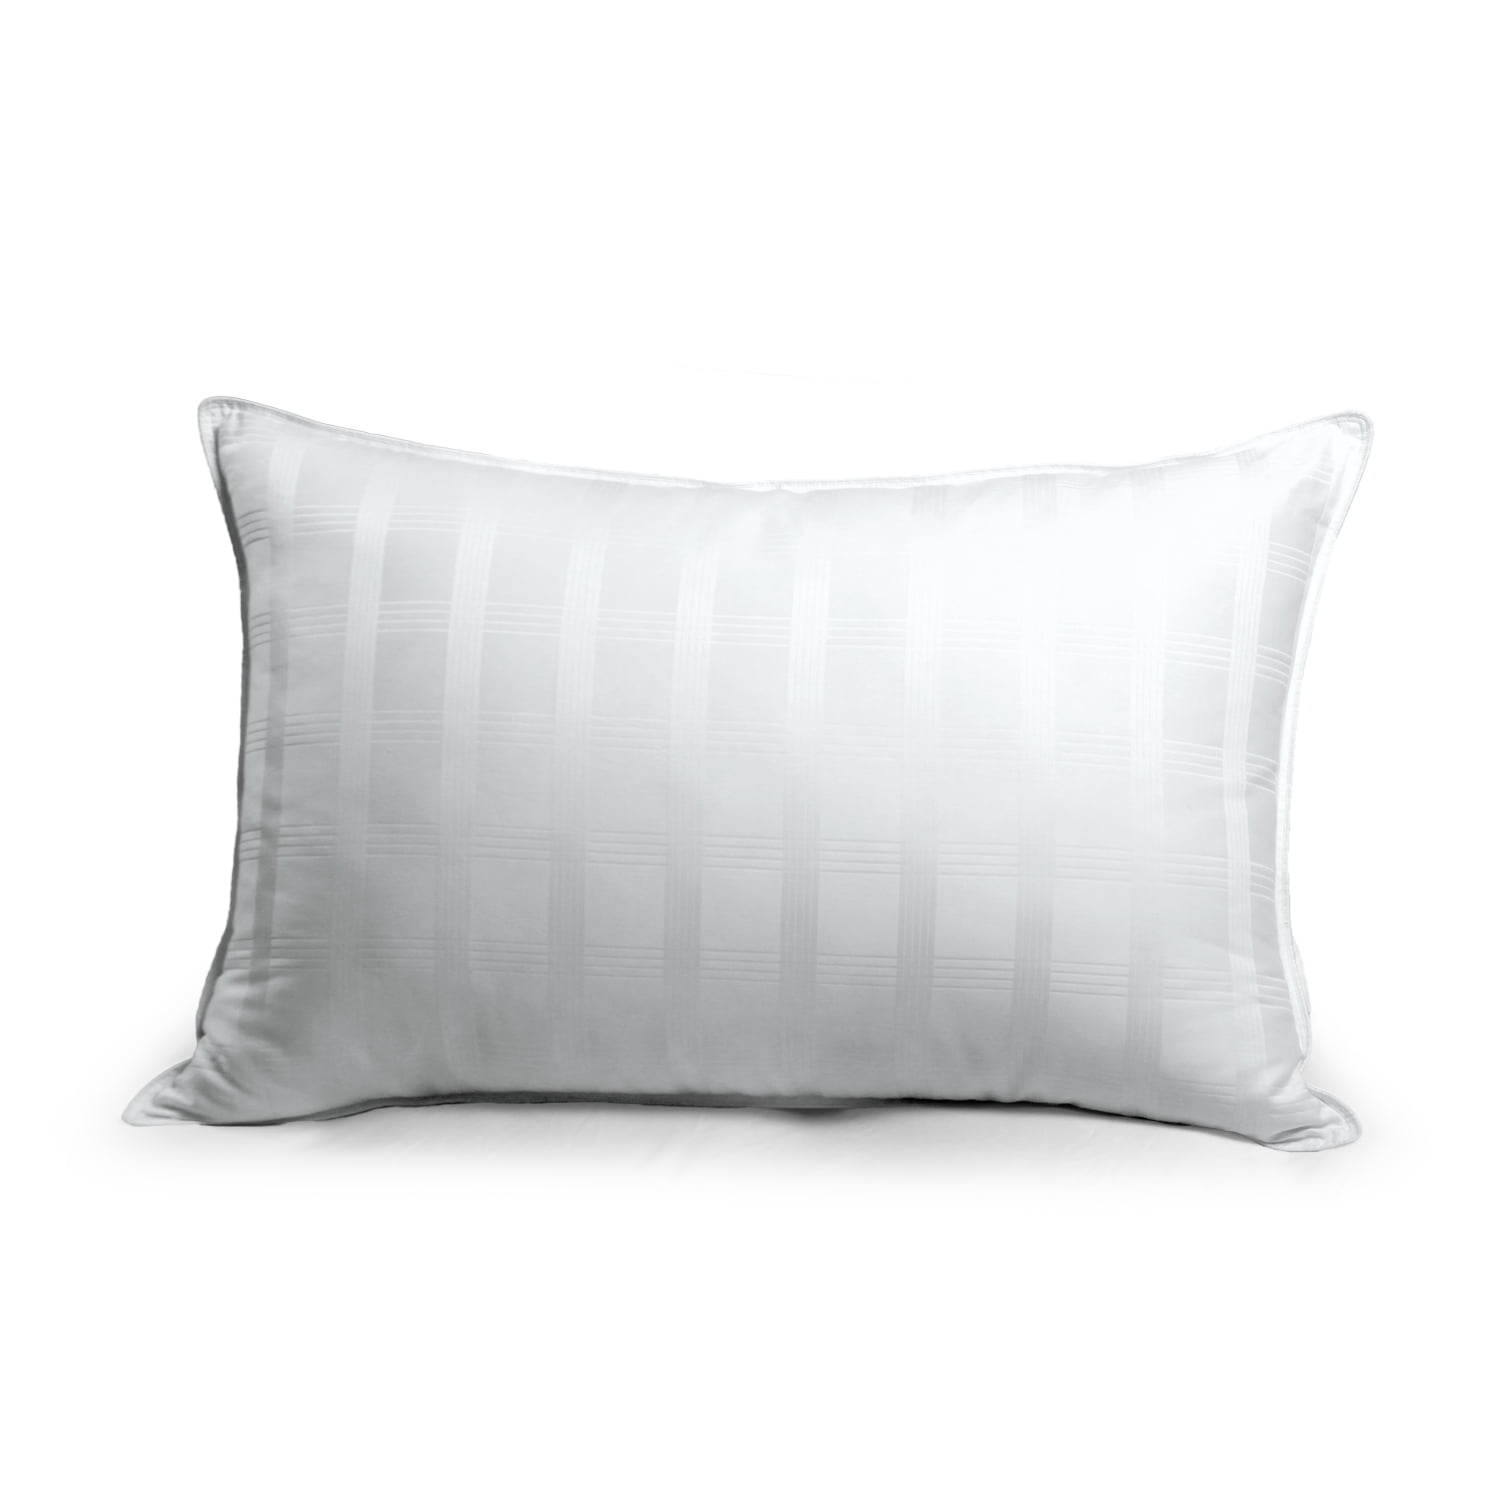  DreamNorth Premium Gel Pillow Loft (Pack of 2) Luxury